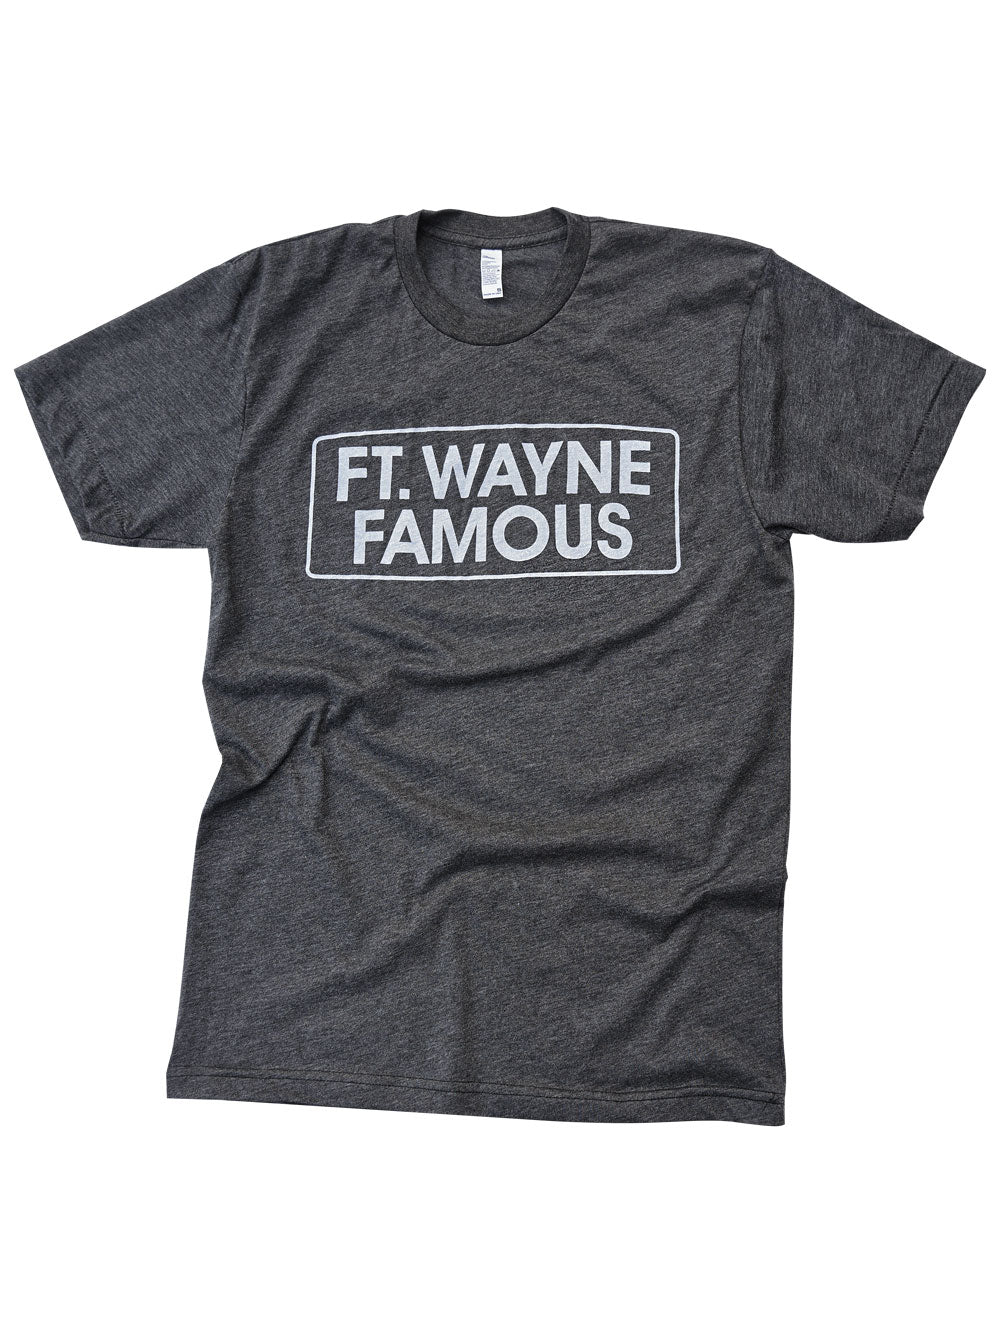 Fort Wayne Famous charcoal heather t-shirt